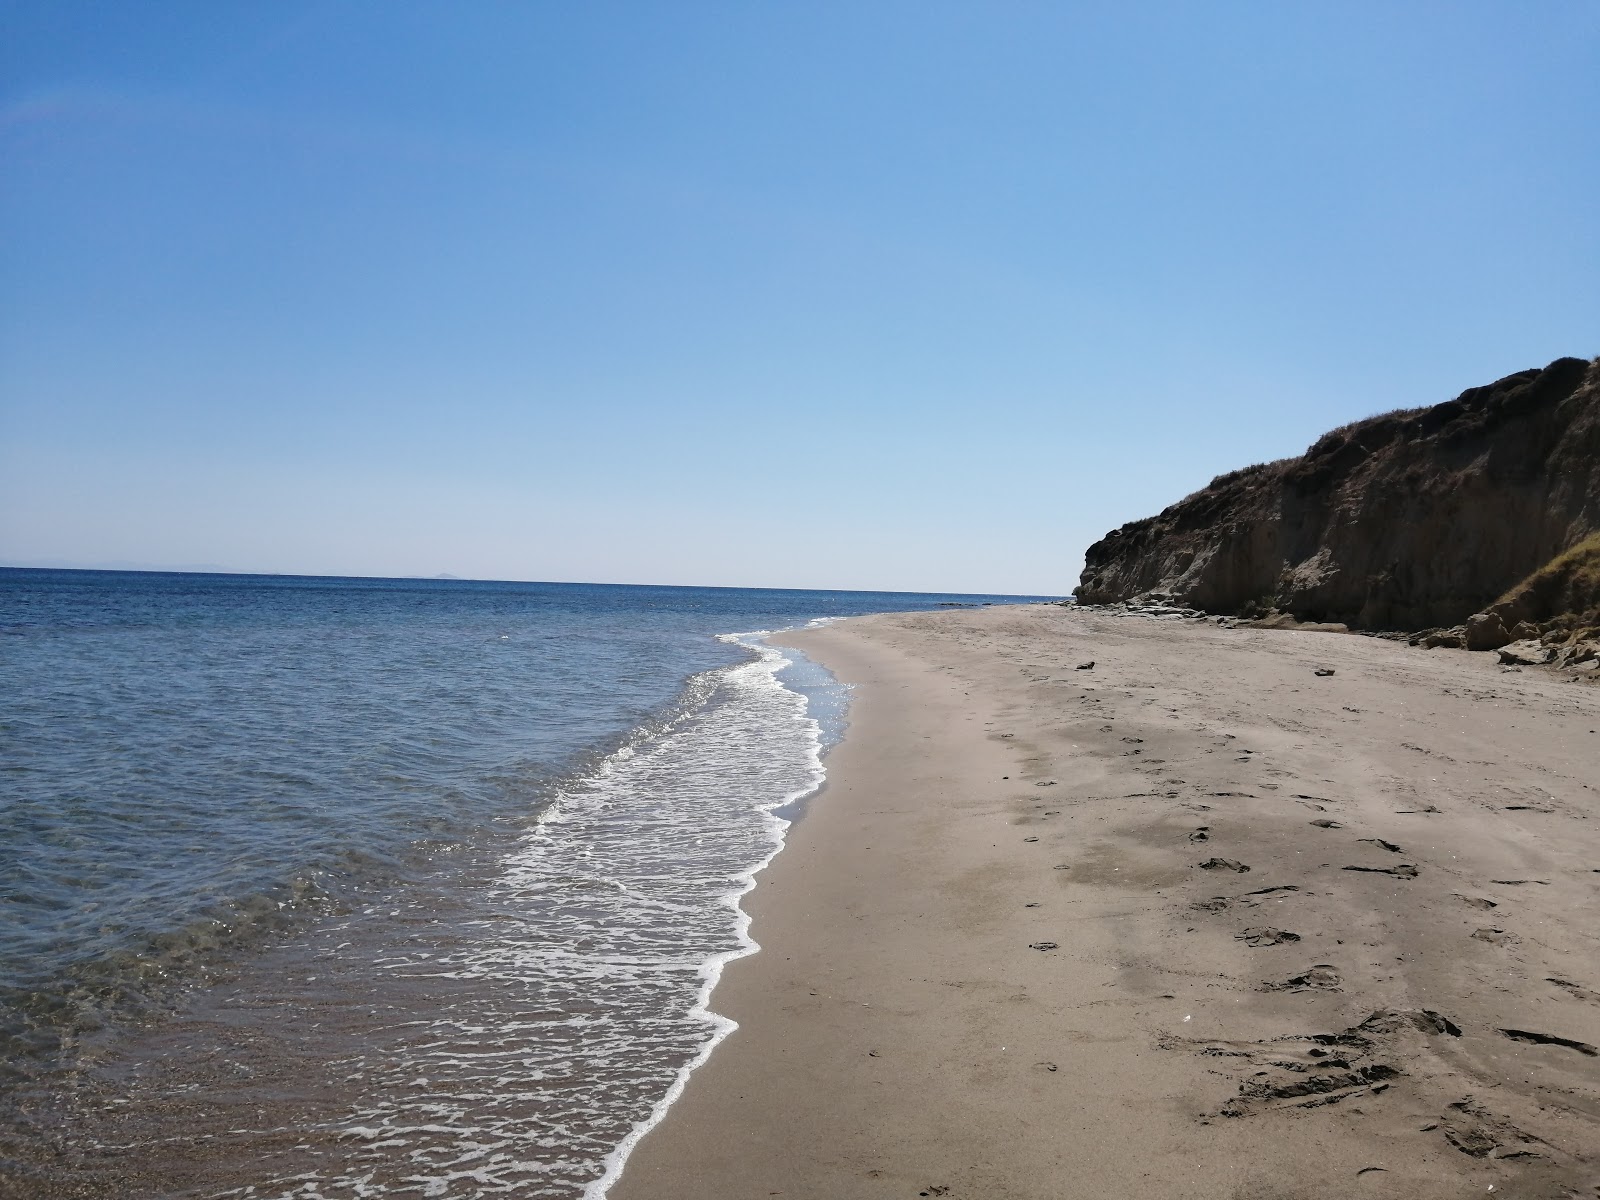 Foto di Gokceada beach con una superficie del sabbia pura grigia